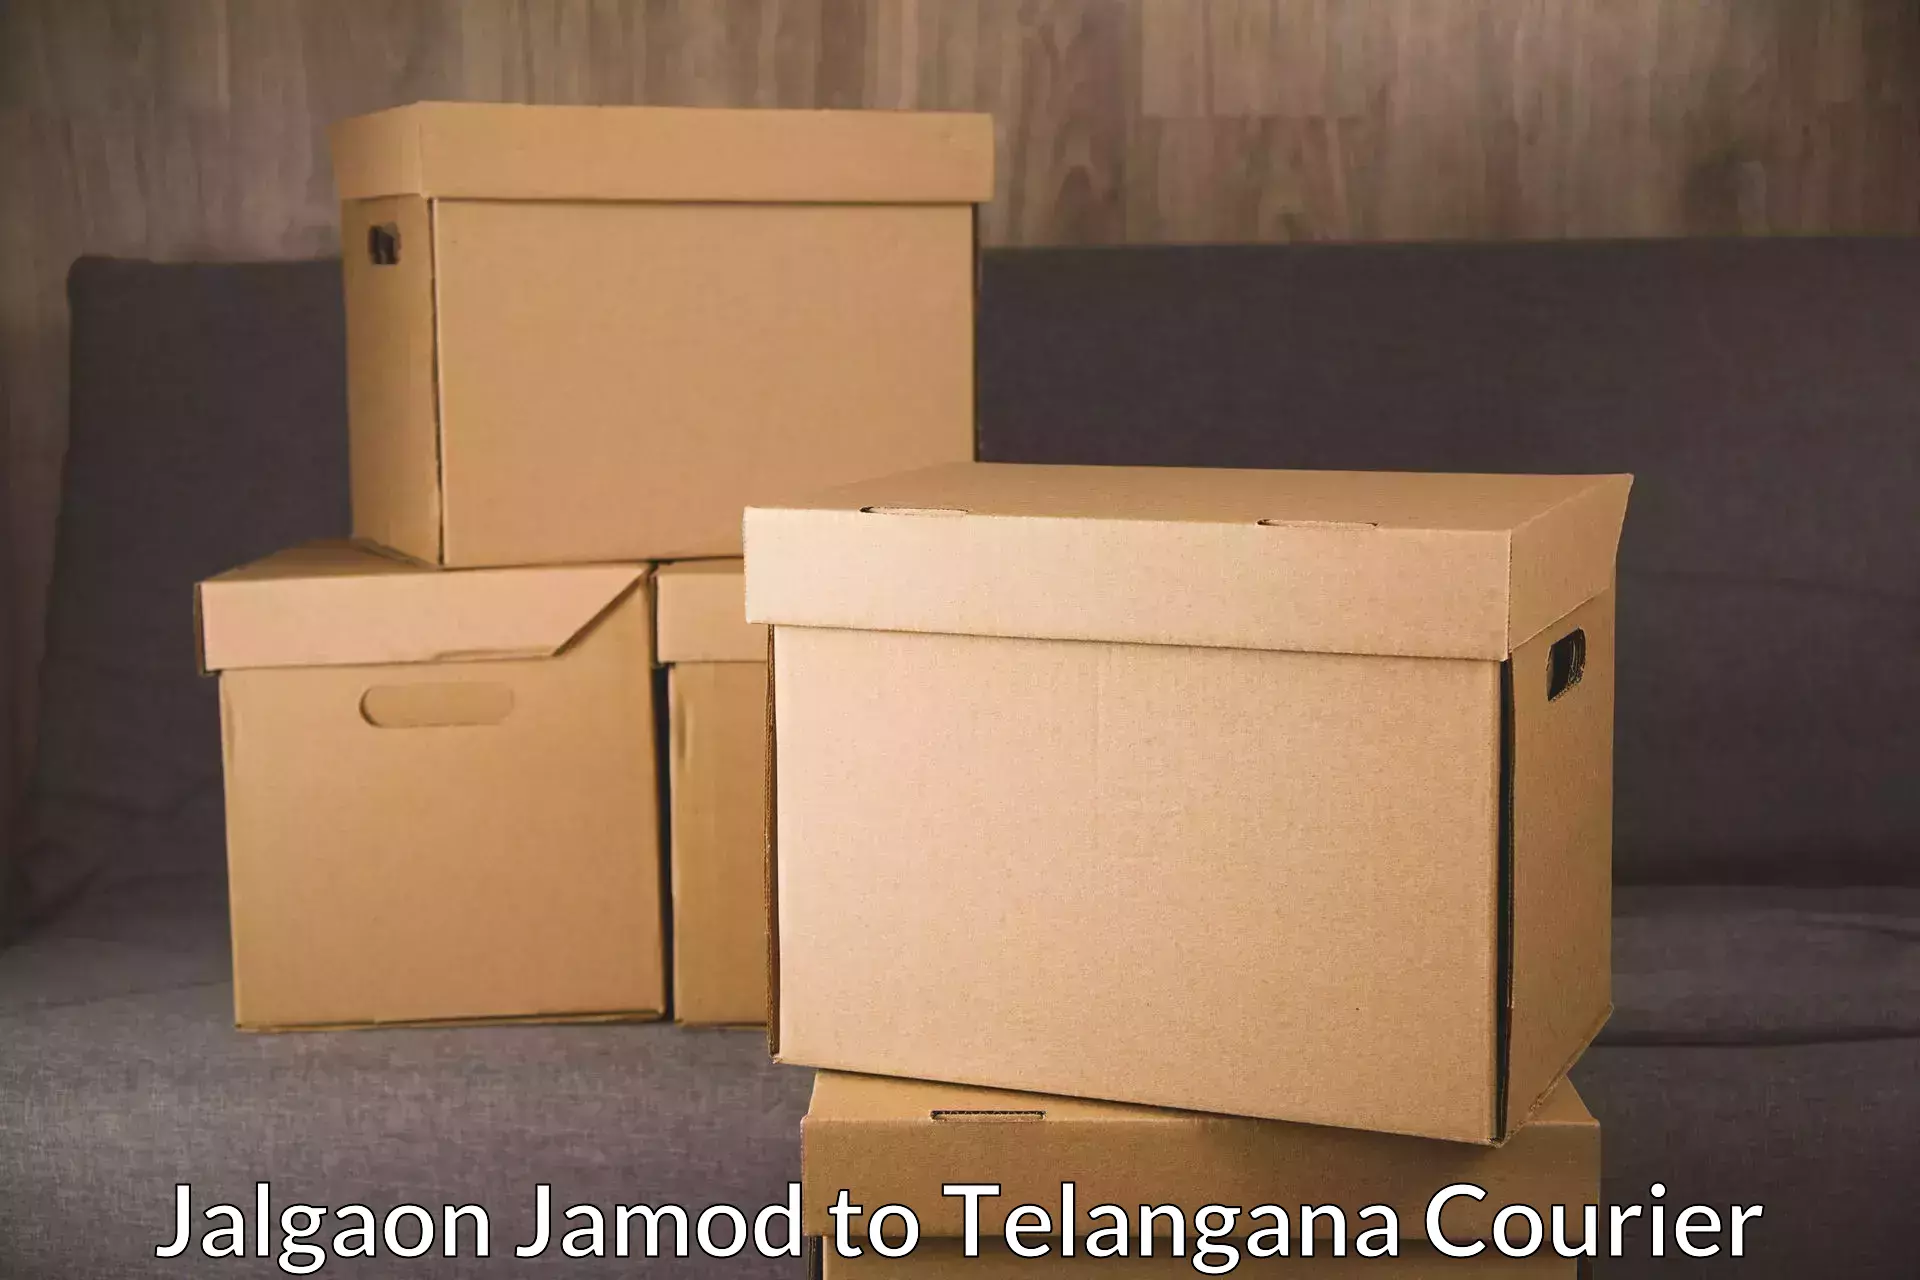 Efficient order fulfillment Jalgaon Jamod to Pregnapur